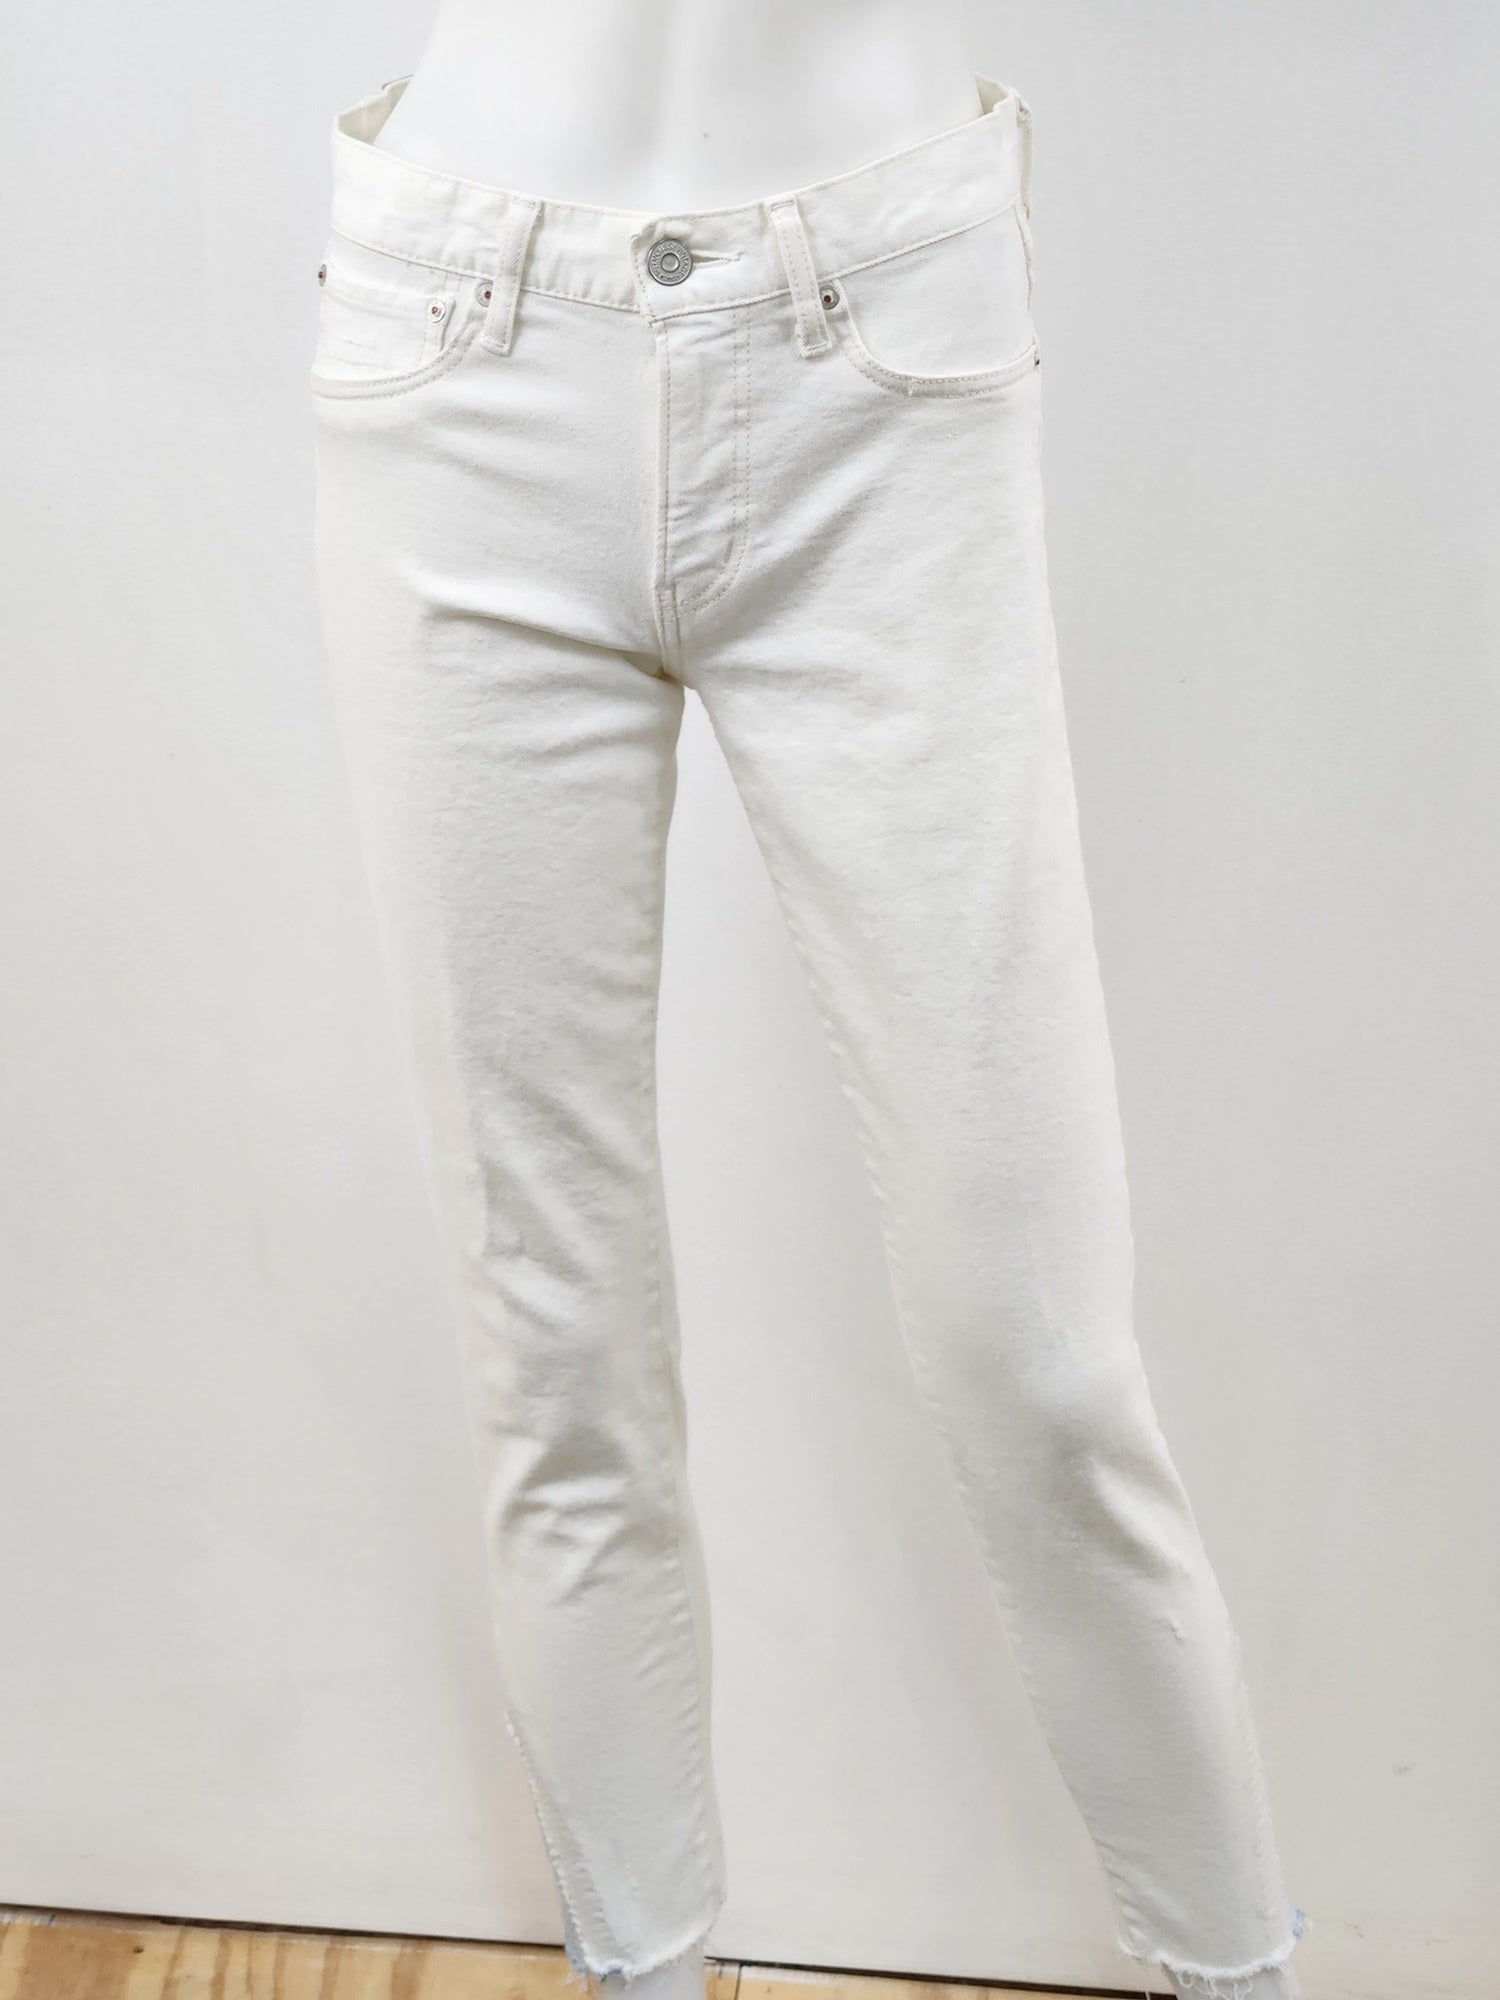 Skinny Jean With Tie Dye Split Detail Size 26